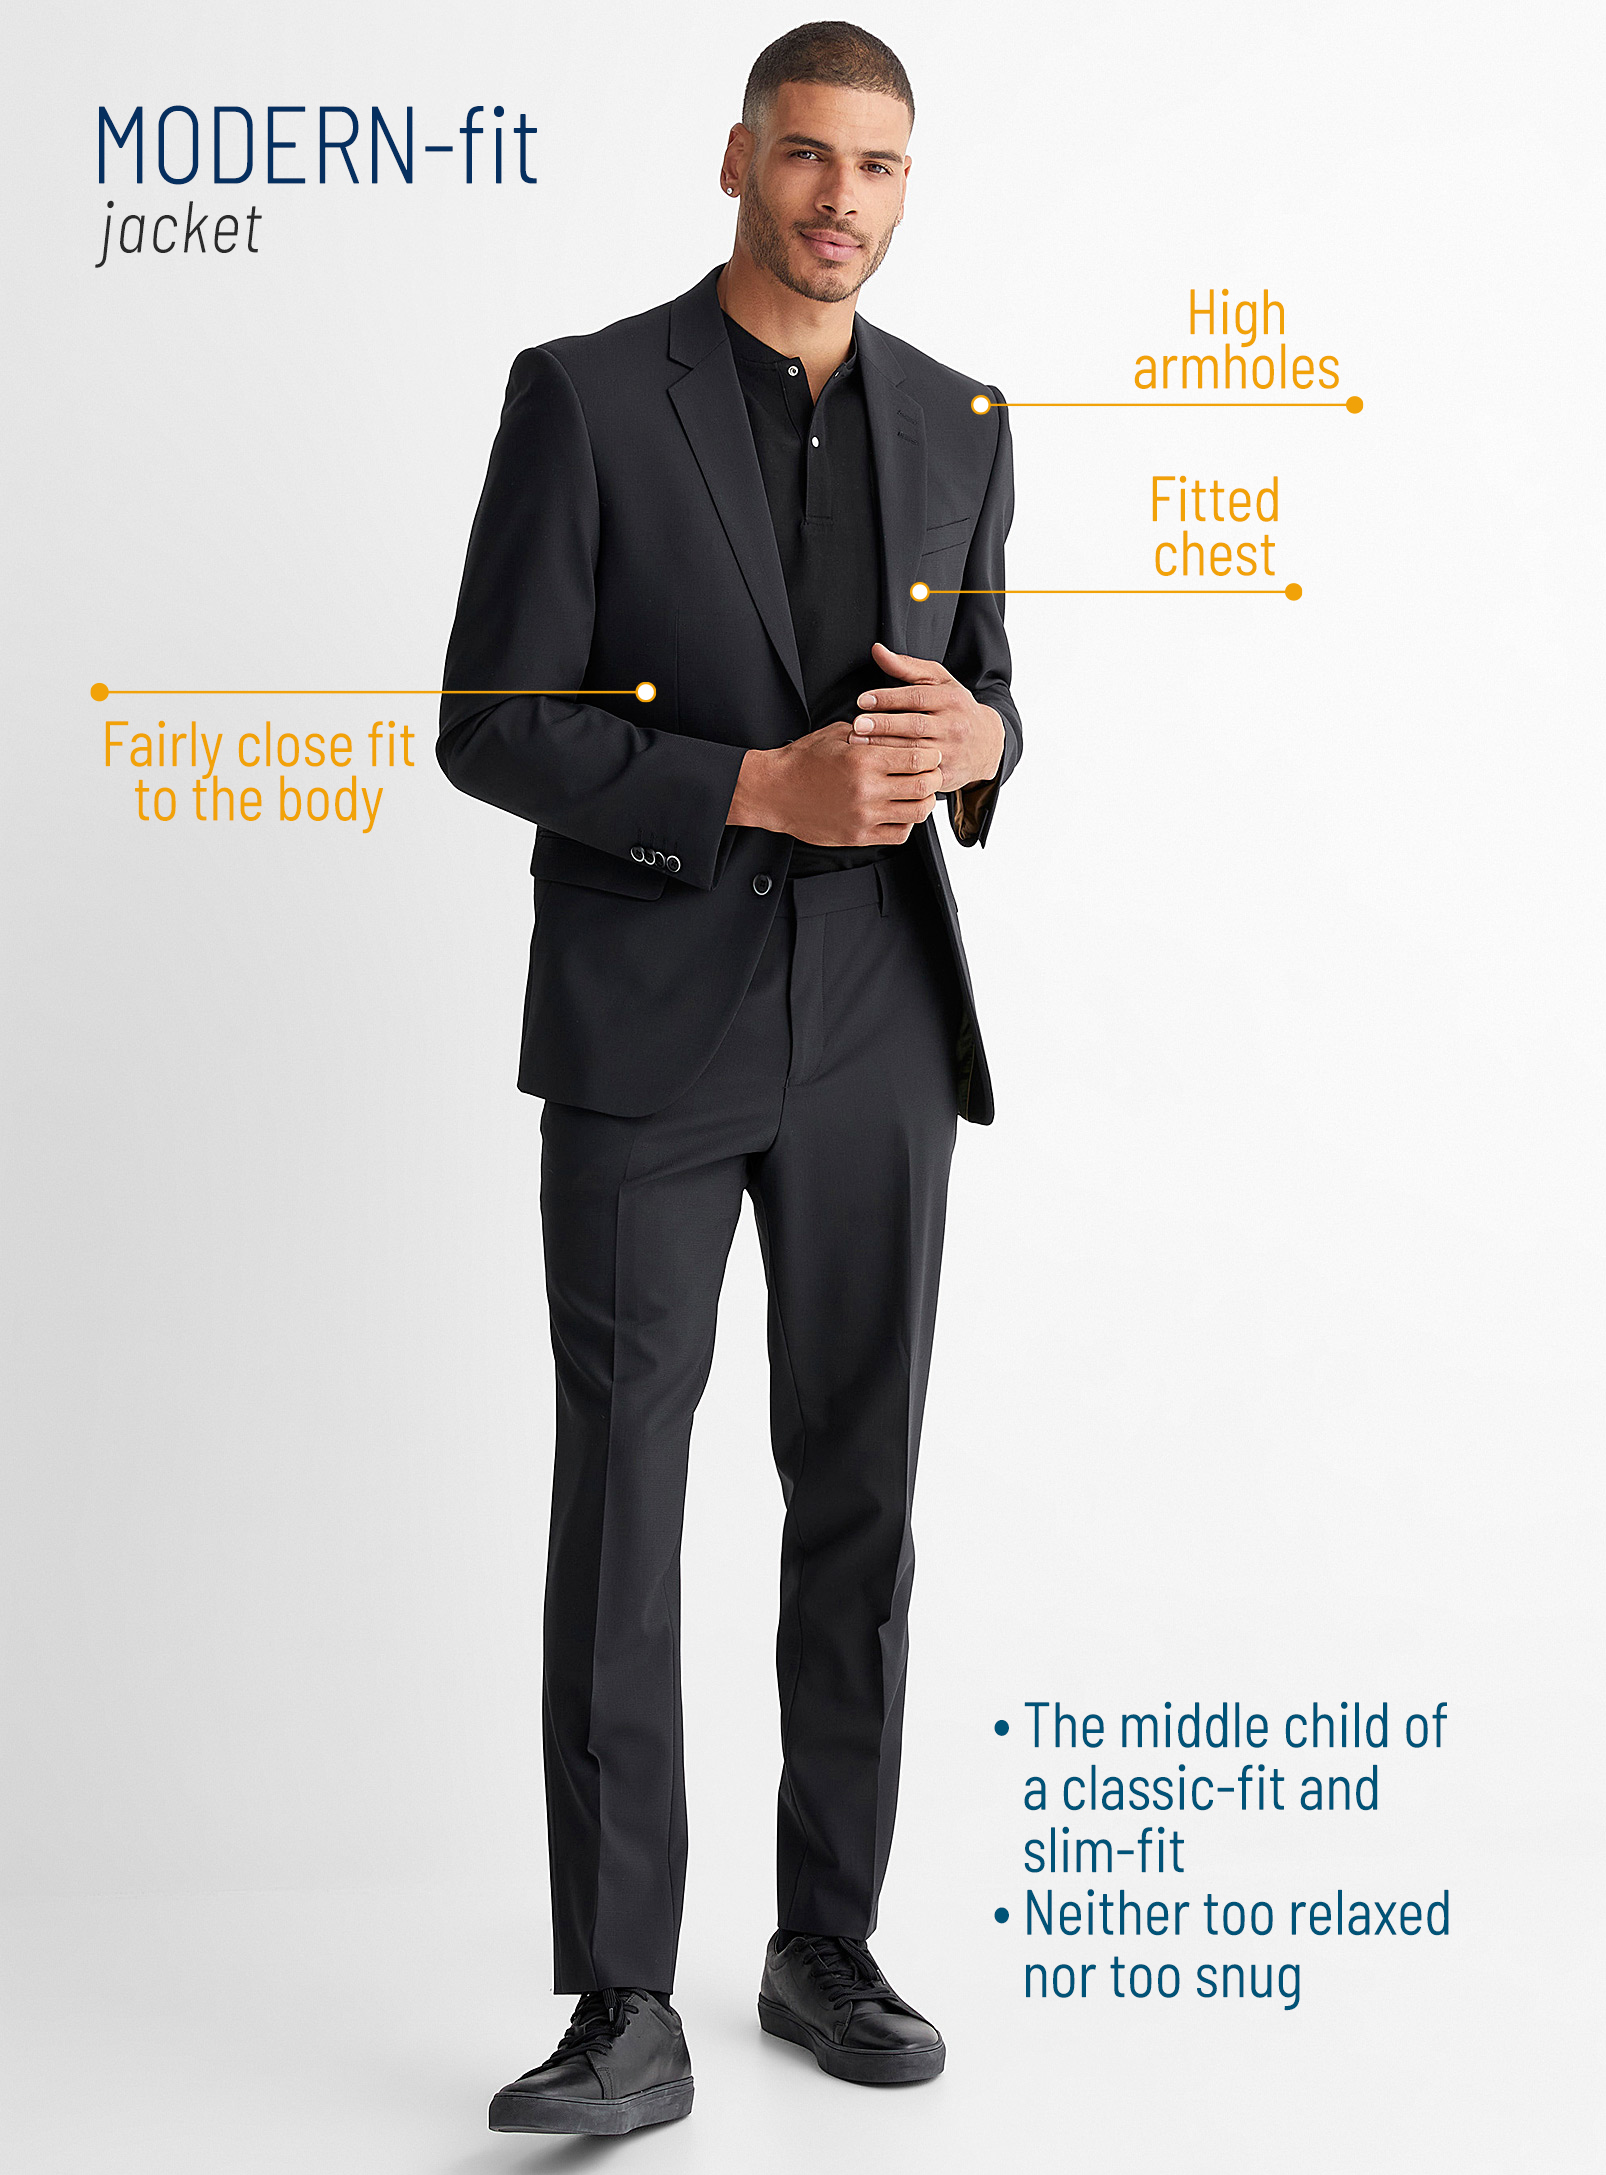 Modern-fit suit jacket features